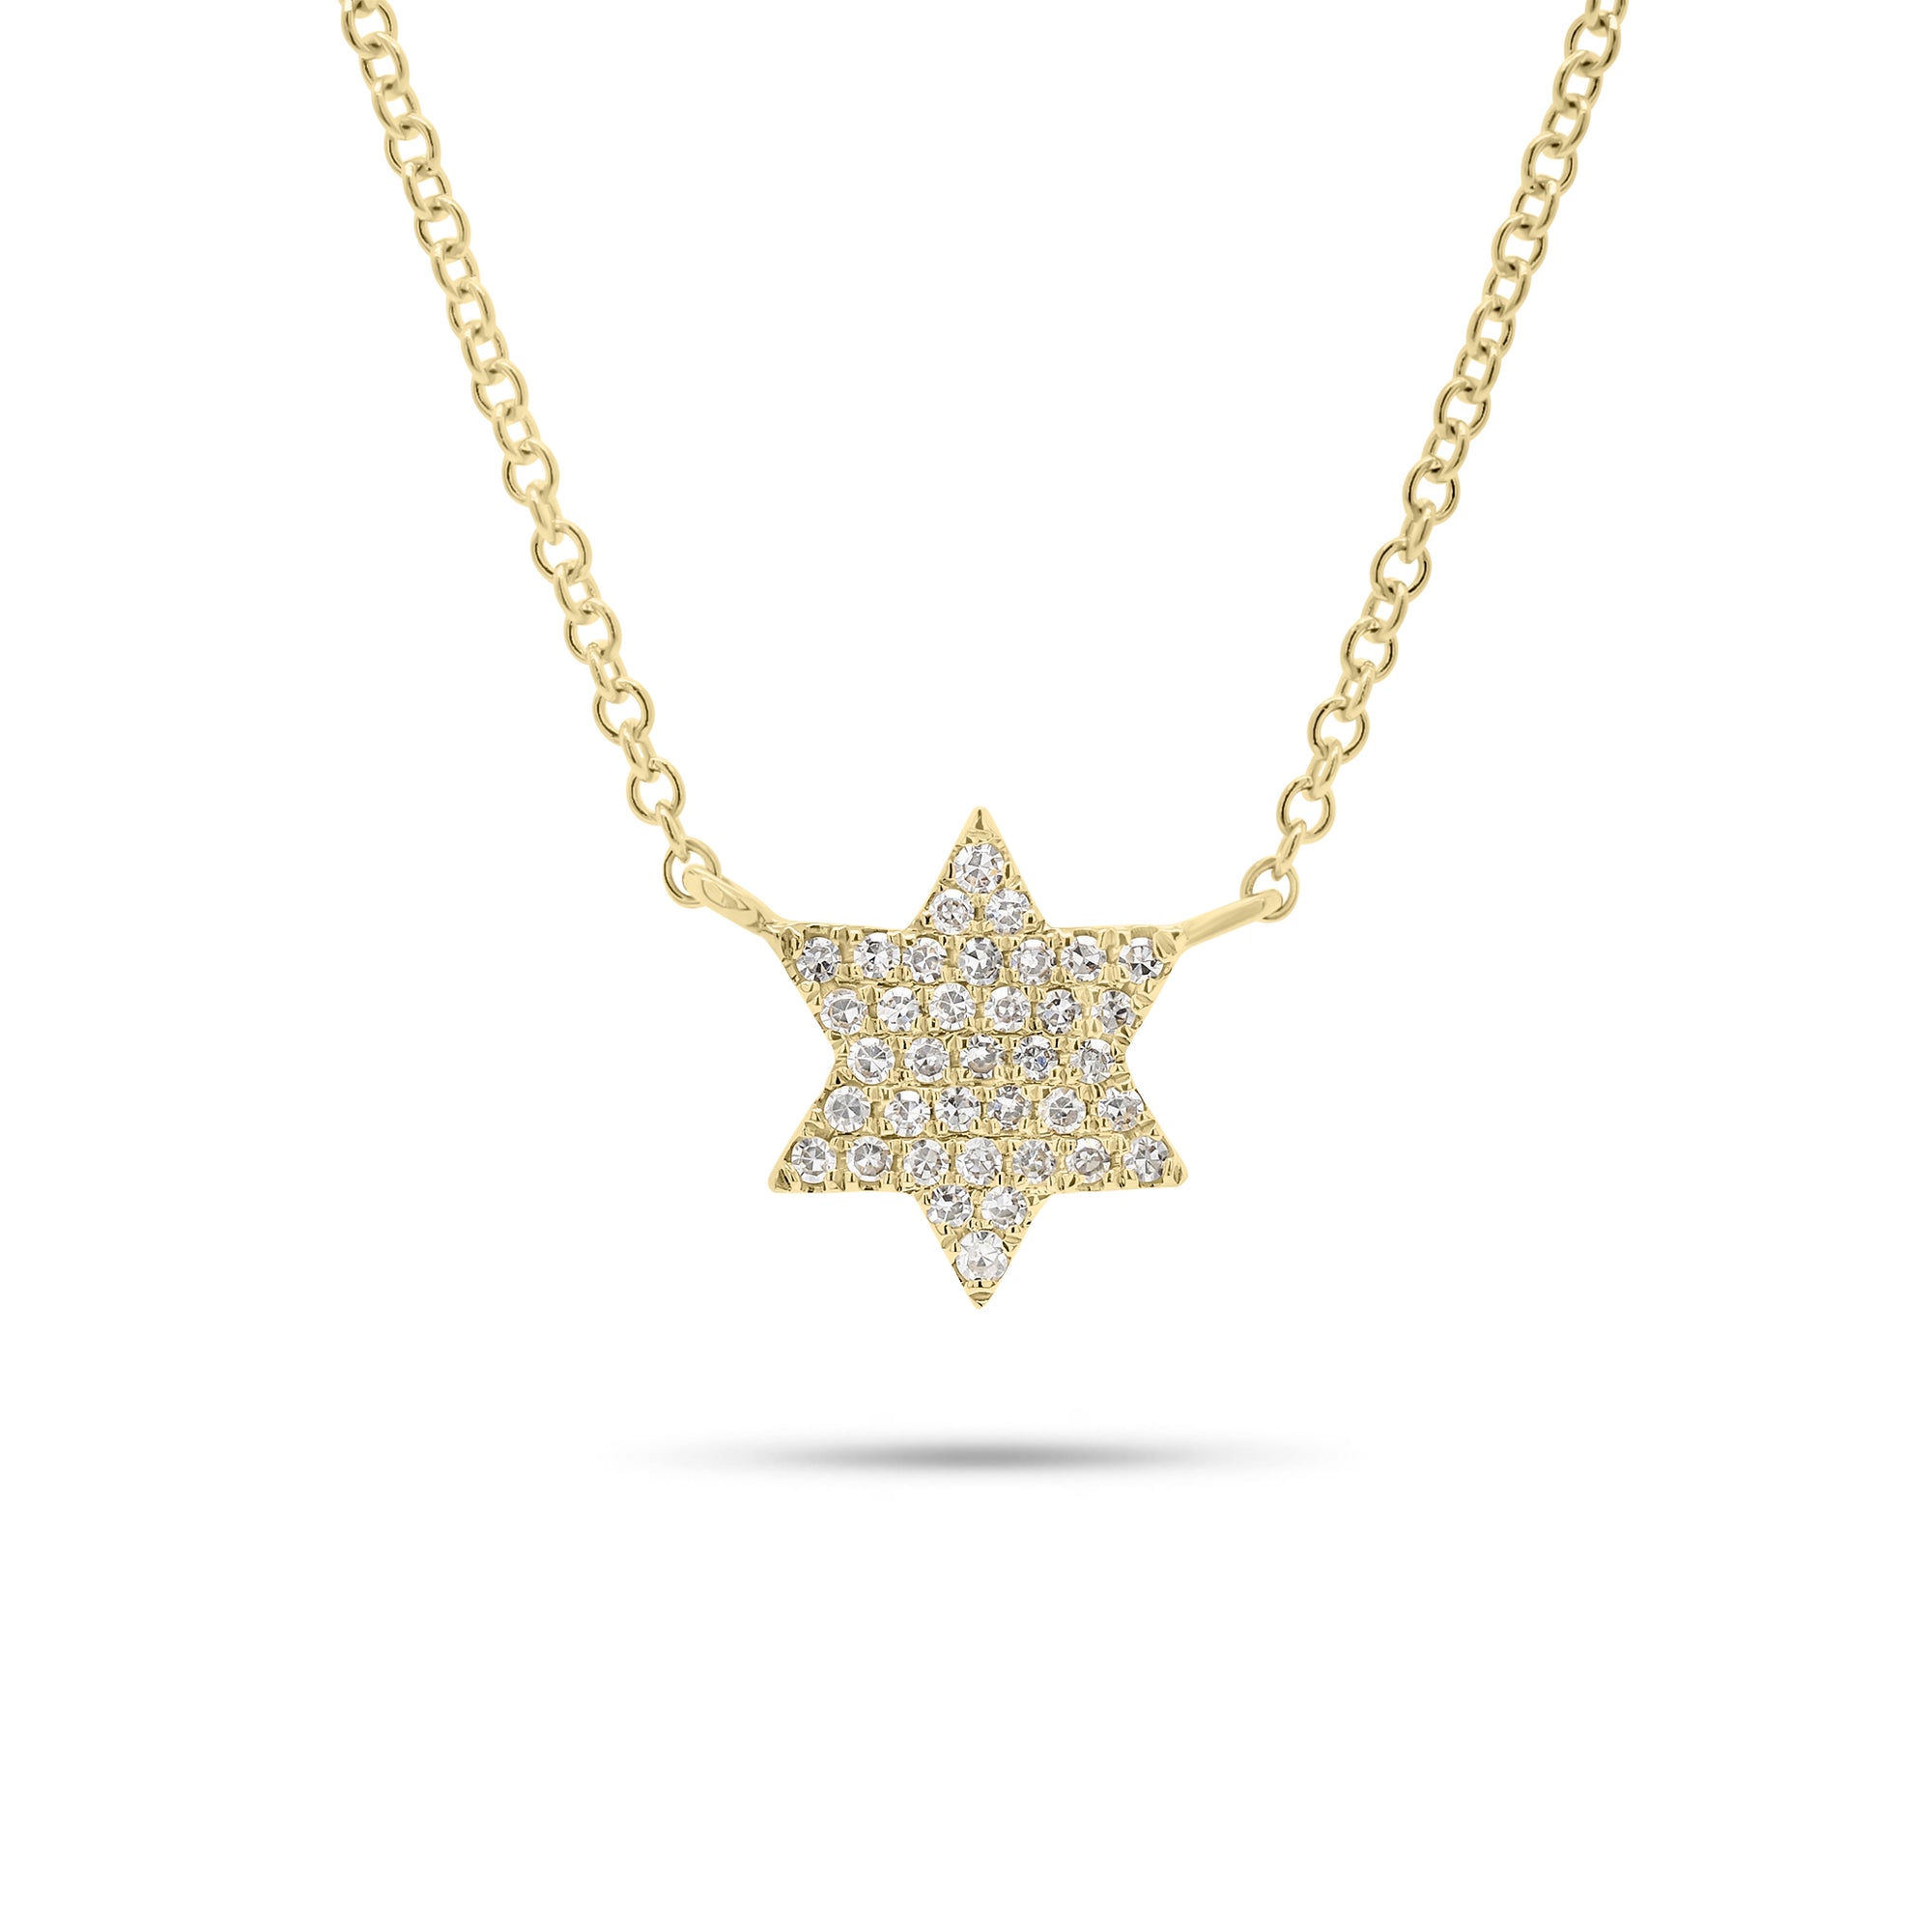 Pave Diamond Star of David Pendant Necklace - 14K gold weighing 1.75 grams  - 37 round diamonds weighing 0.09 carats